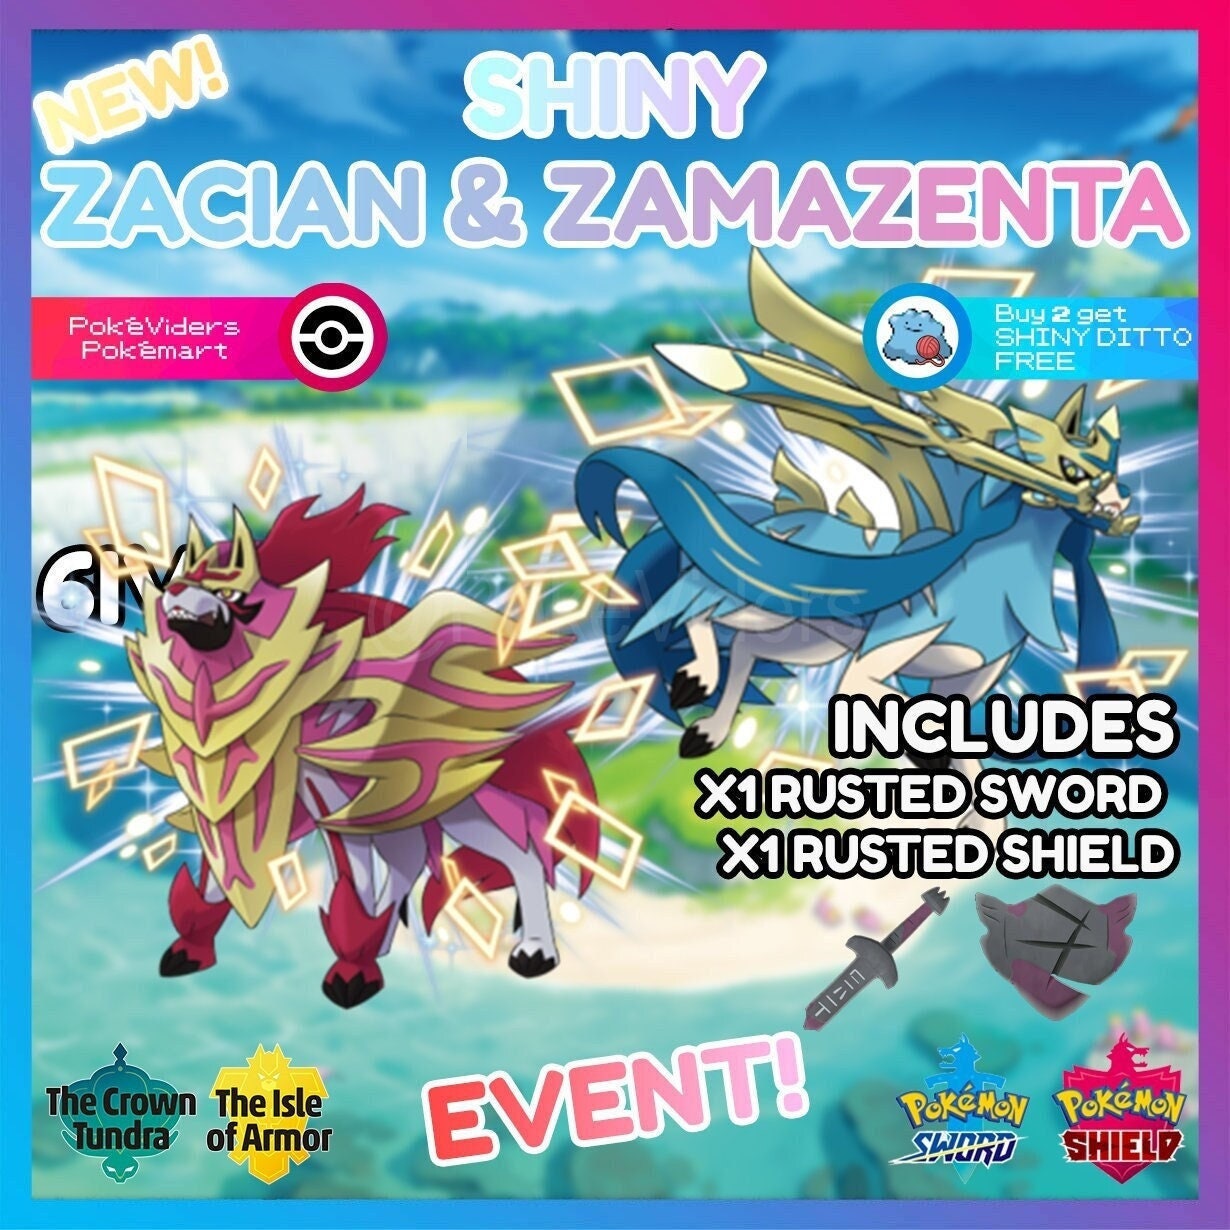 Shiny Zacian And Zamazenta Distribution Announced For Japan